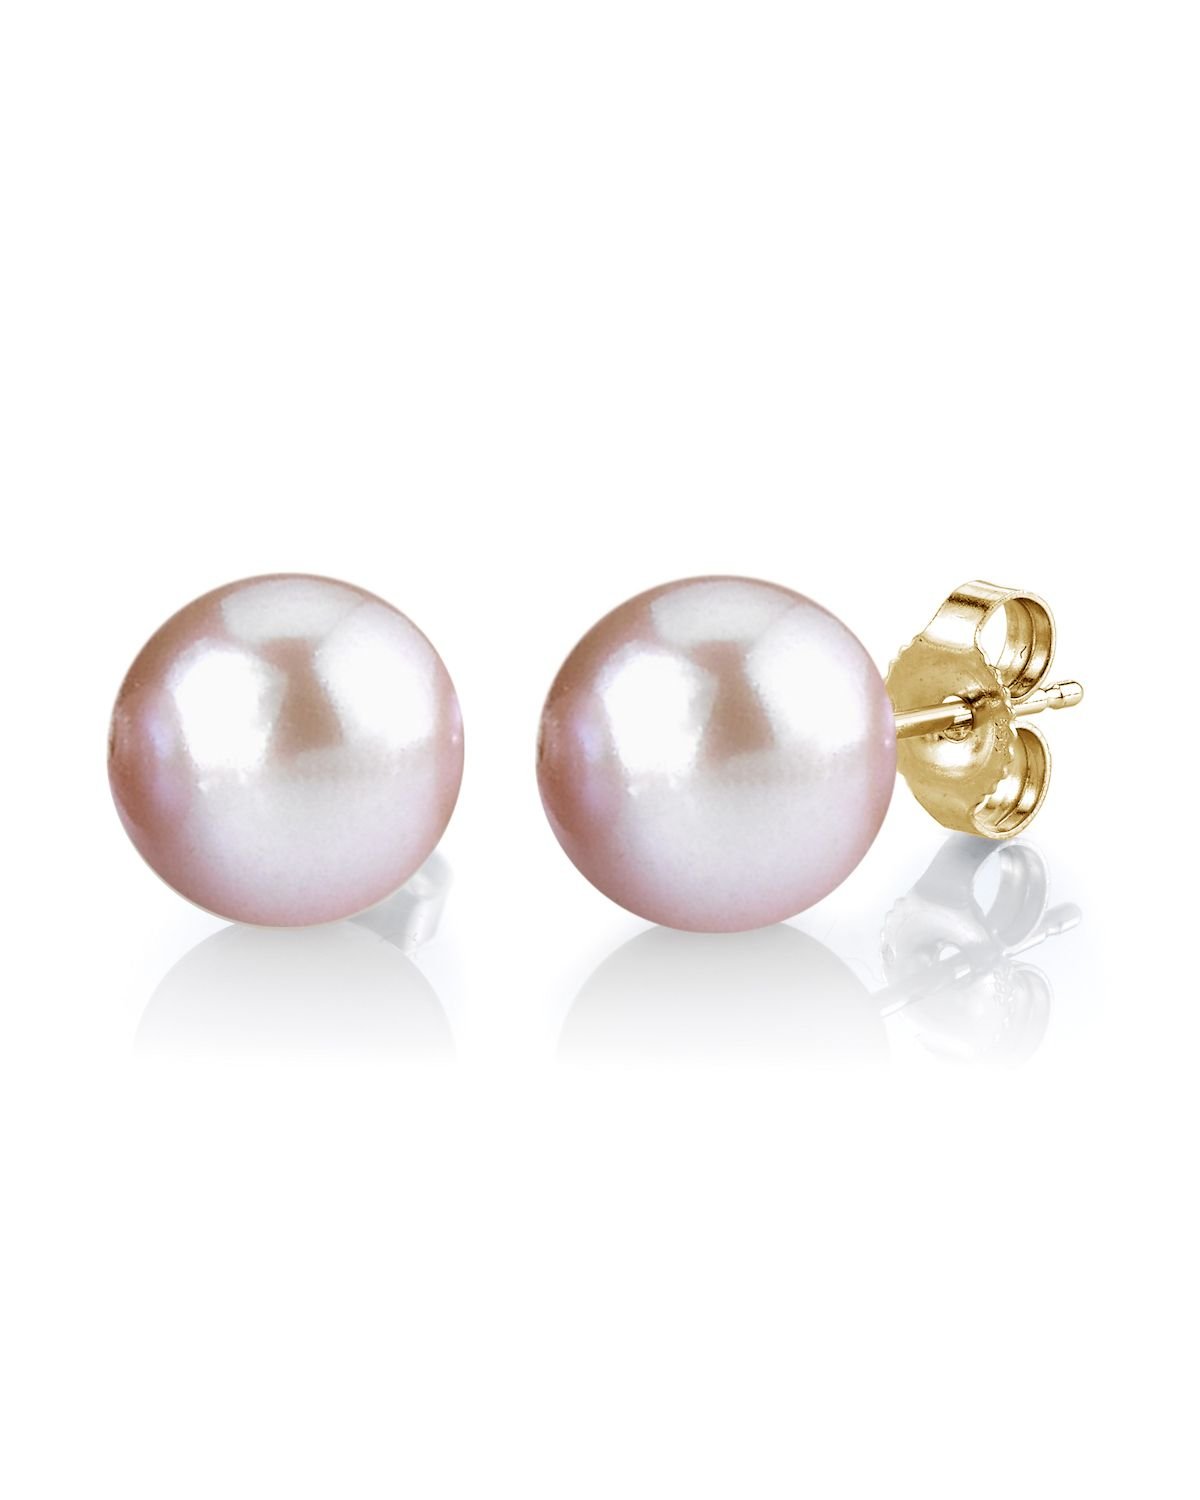 8mm Pink Freshwater Round Pearl Stud Earrings - Third Image